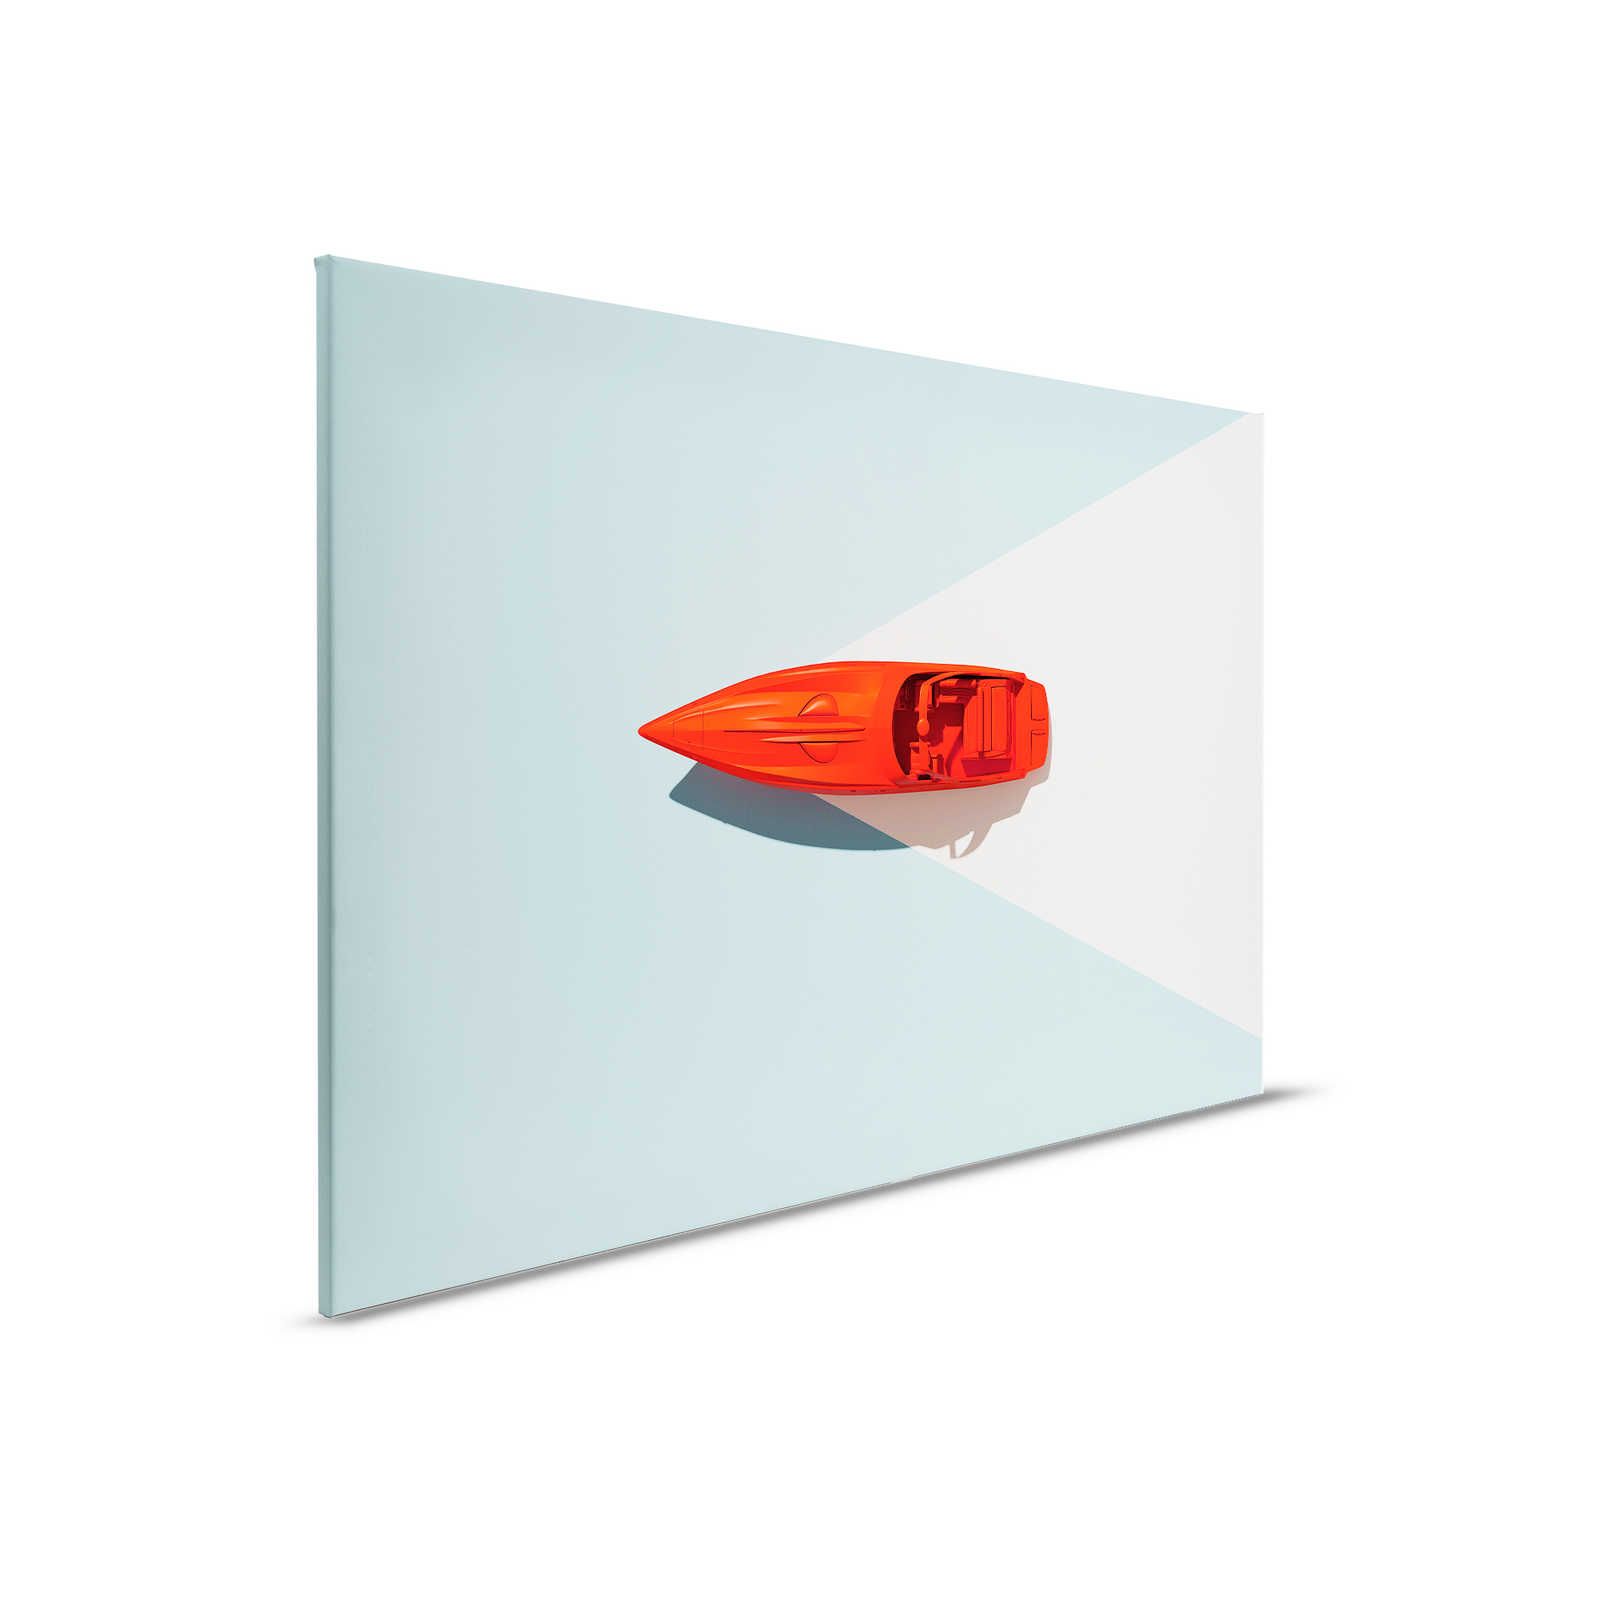         Key West 1 - Boot Leinwandbild Minimalistic Design – 0,90 m x 0,60 m
    